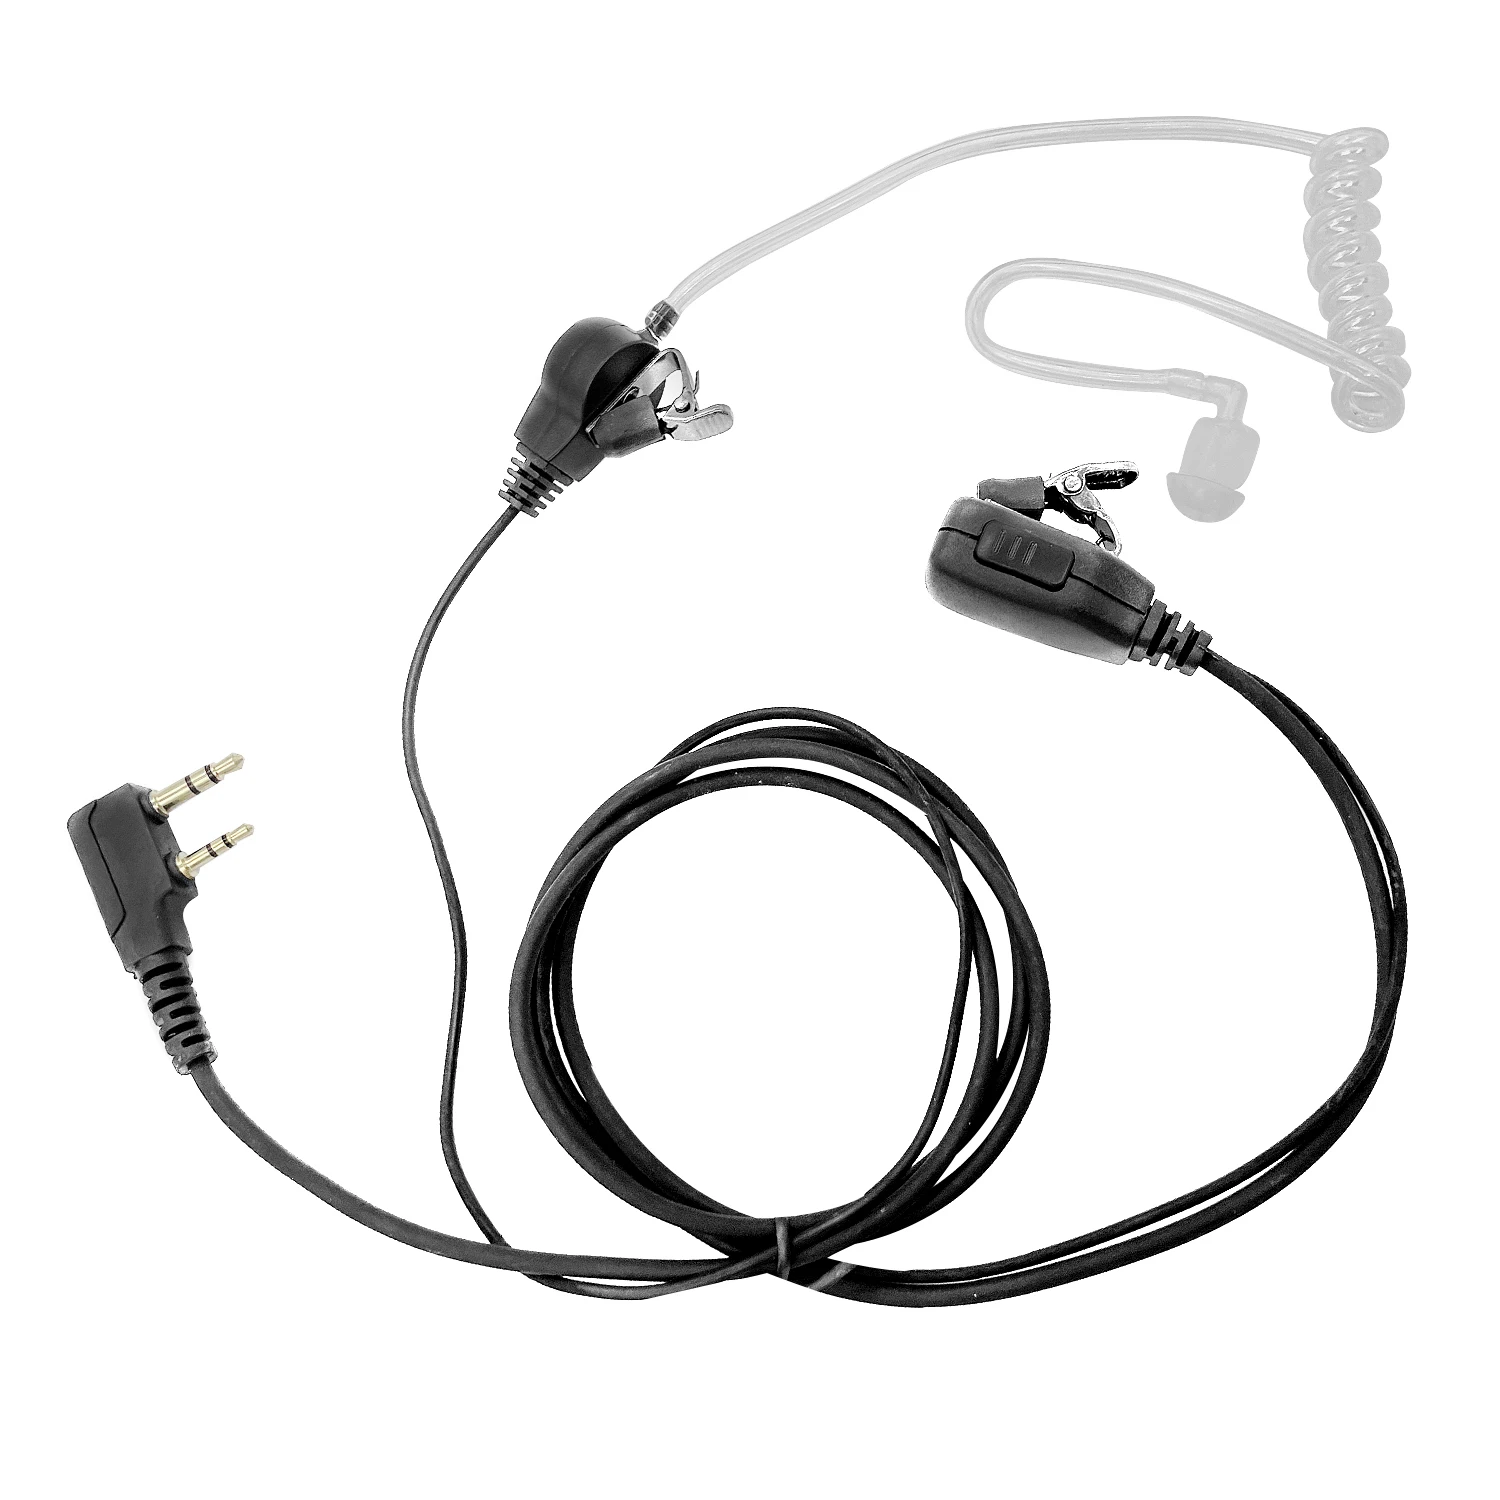 walkie talkie Earpiece microphone headset for BAOFENG BF-T3, BF-888S, BF-F8HP, BF-F9, BF-F9 V2+, RD-5R two way radios